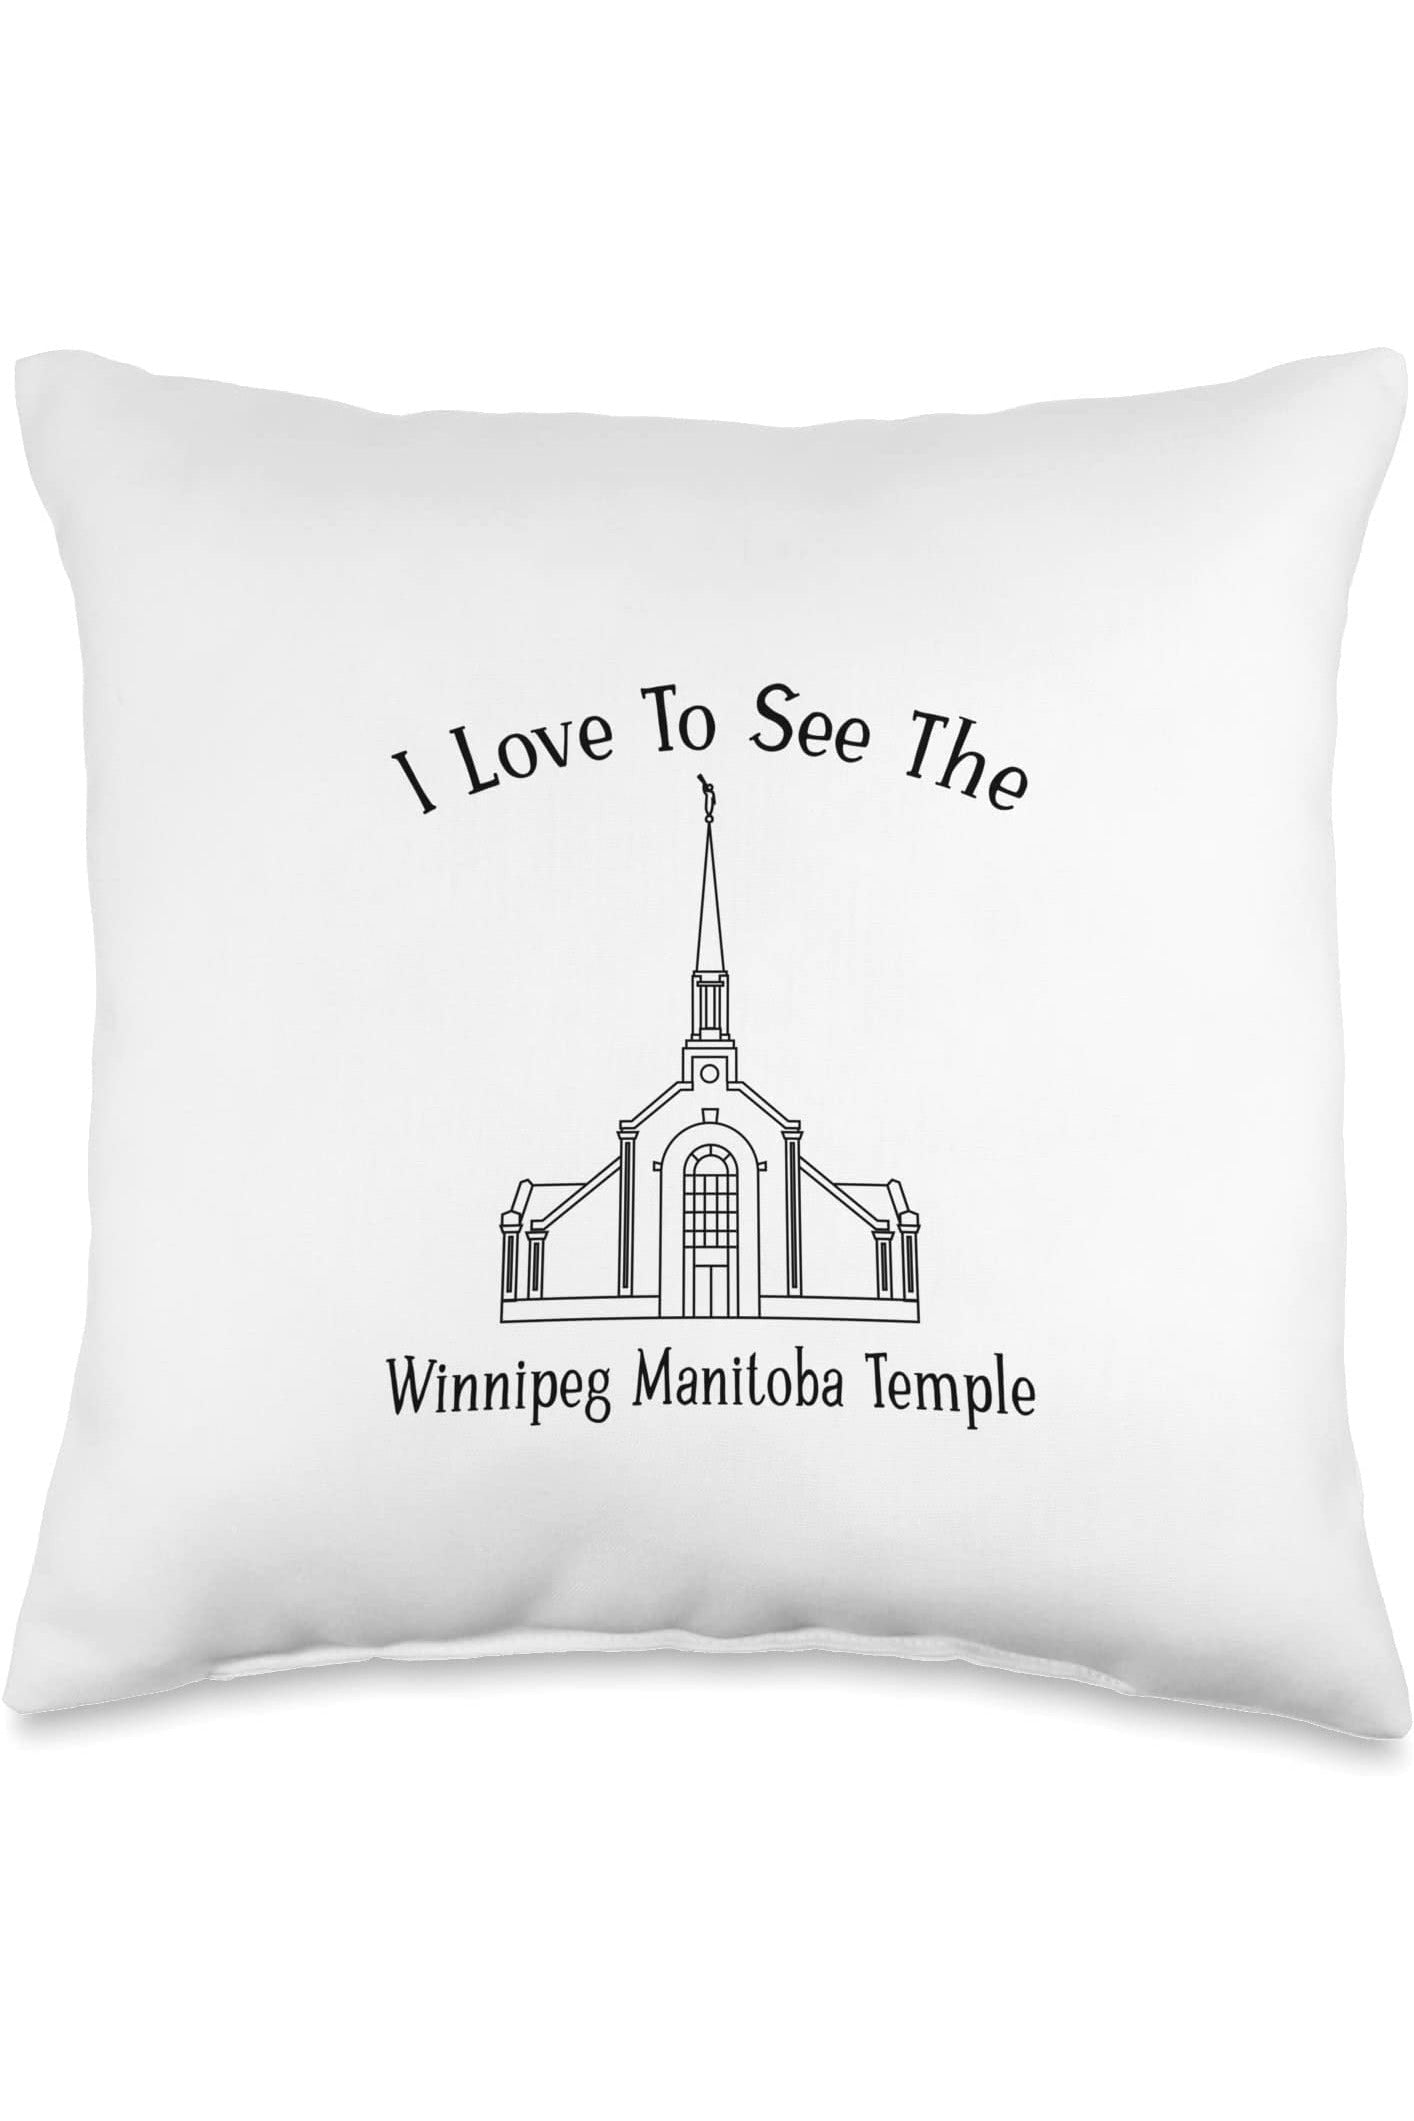 Winnipeg Manitoba Temple Throw Pillows - Happy Style (English) US